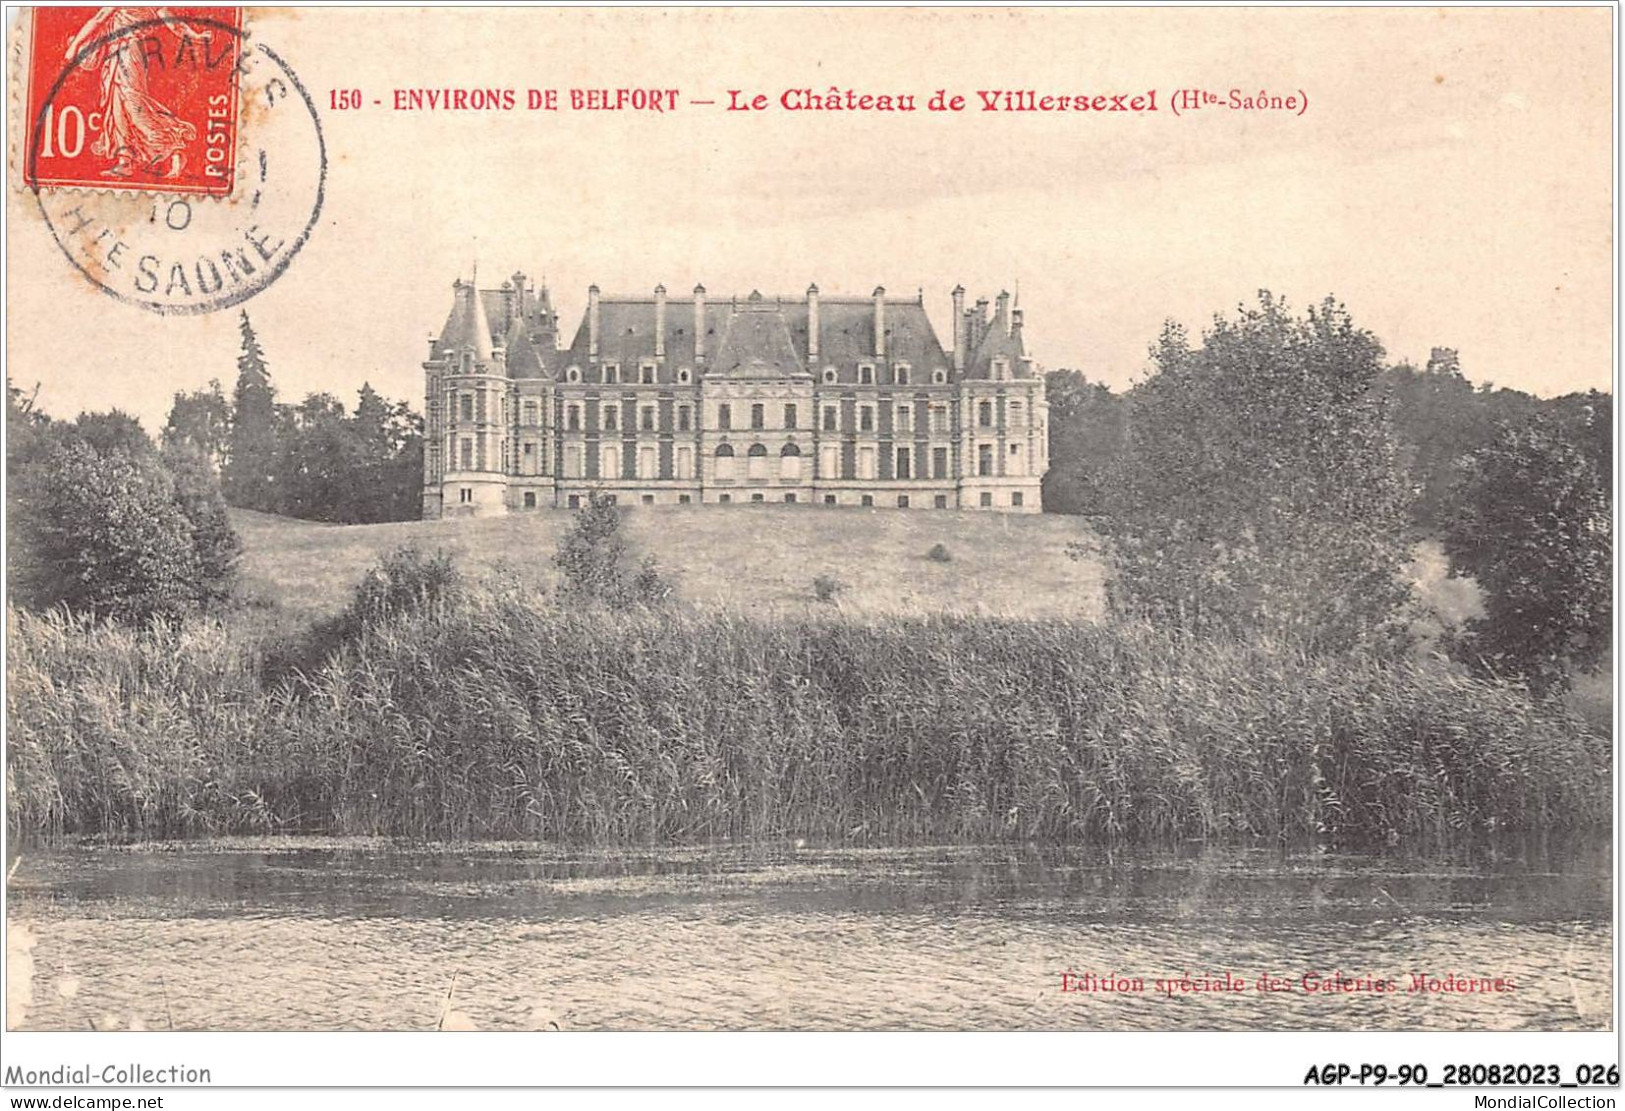 AGPP9-0737-90 - BELFORT - Hte-Saone - Le Chateau De Villersexel  - Belfort - City